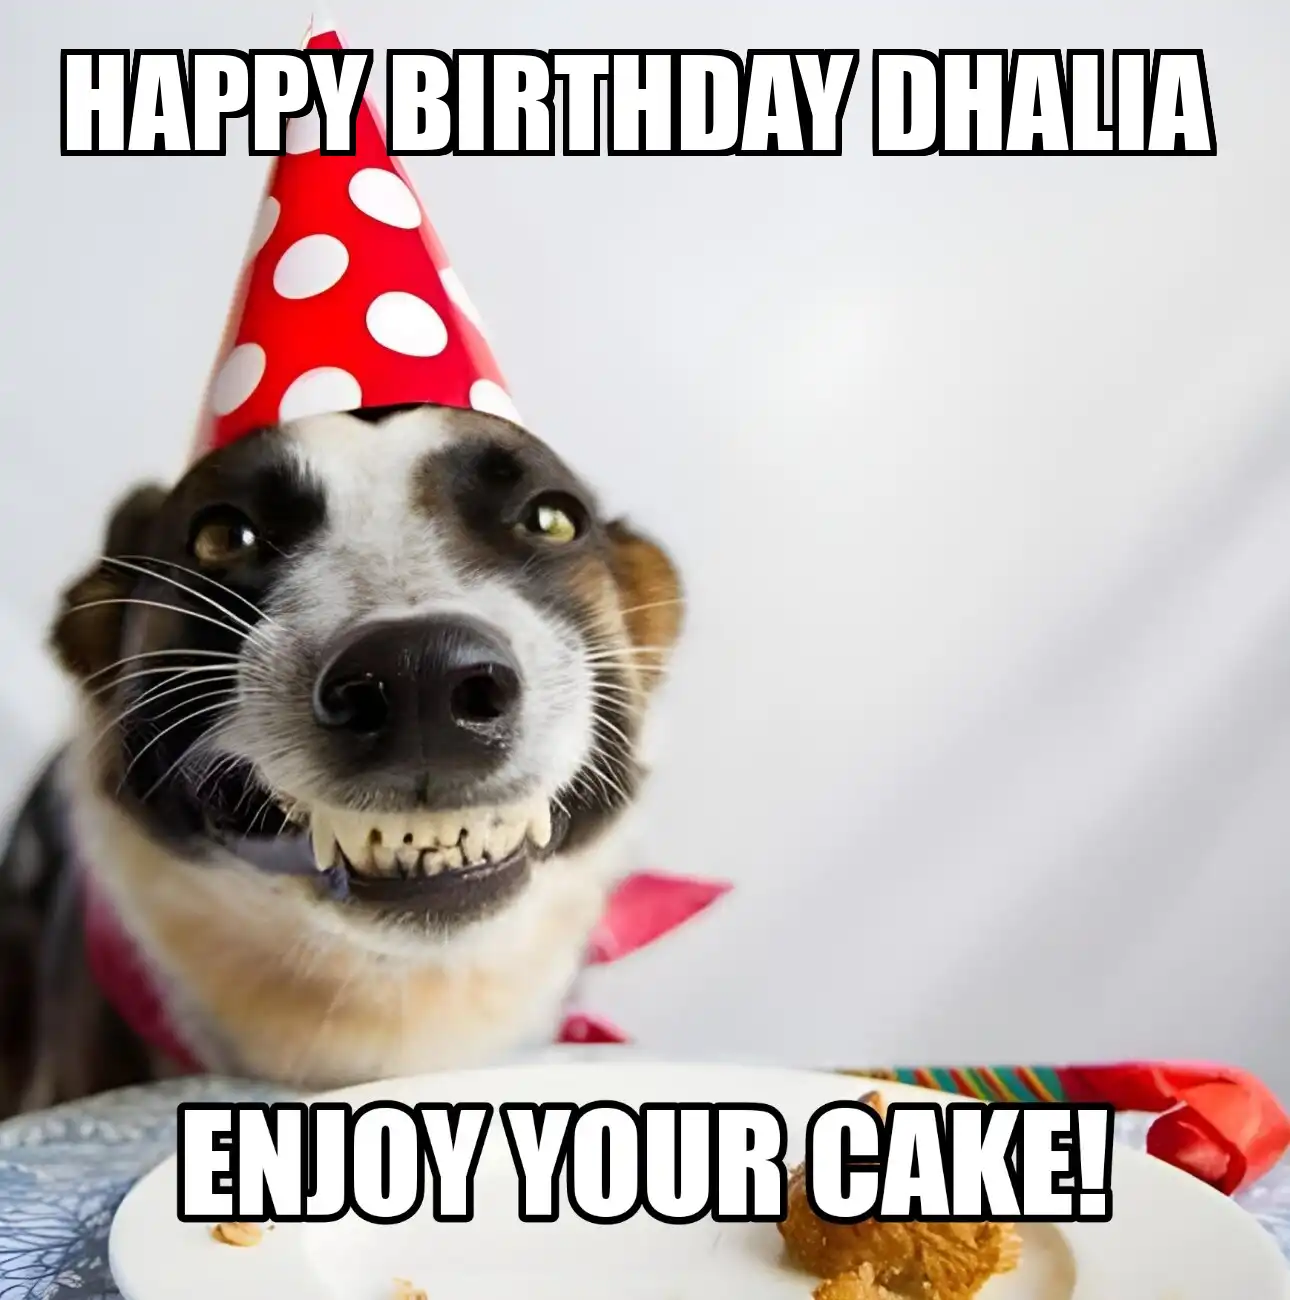 Happy Birthday Dhalia Enjoy Your Cake Dog Meme